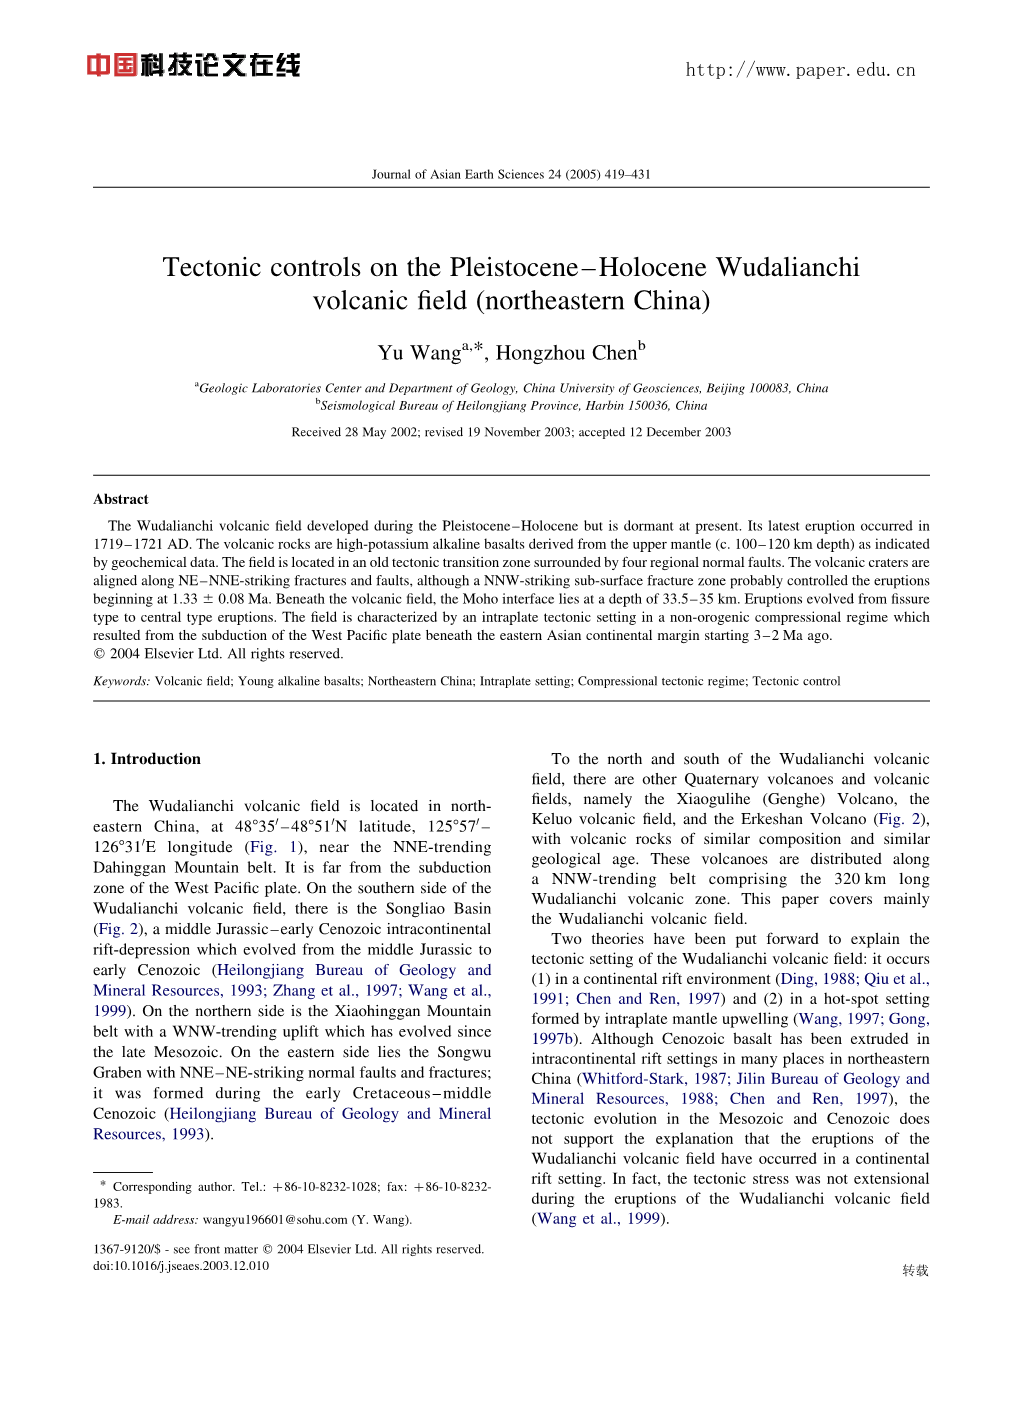 Tectonic Controls on the Pleistocene–Holocene Wudalianchi Volcanic ﬁeld (Northeastern China)